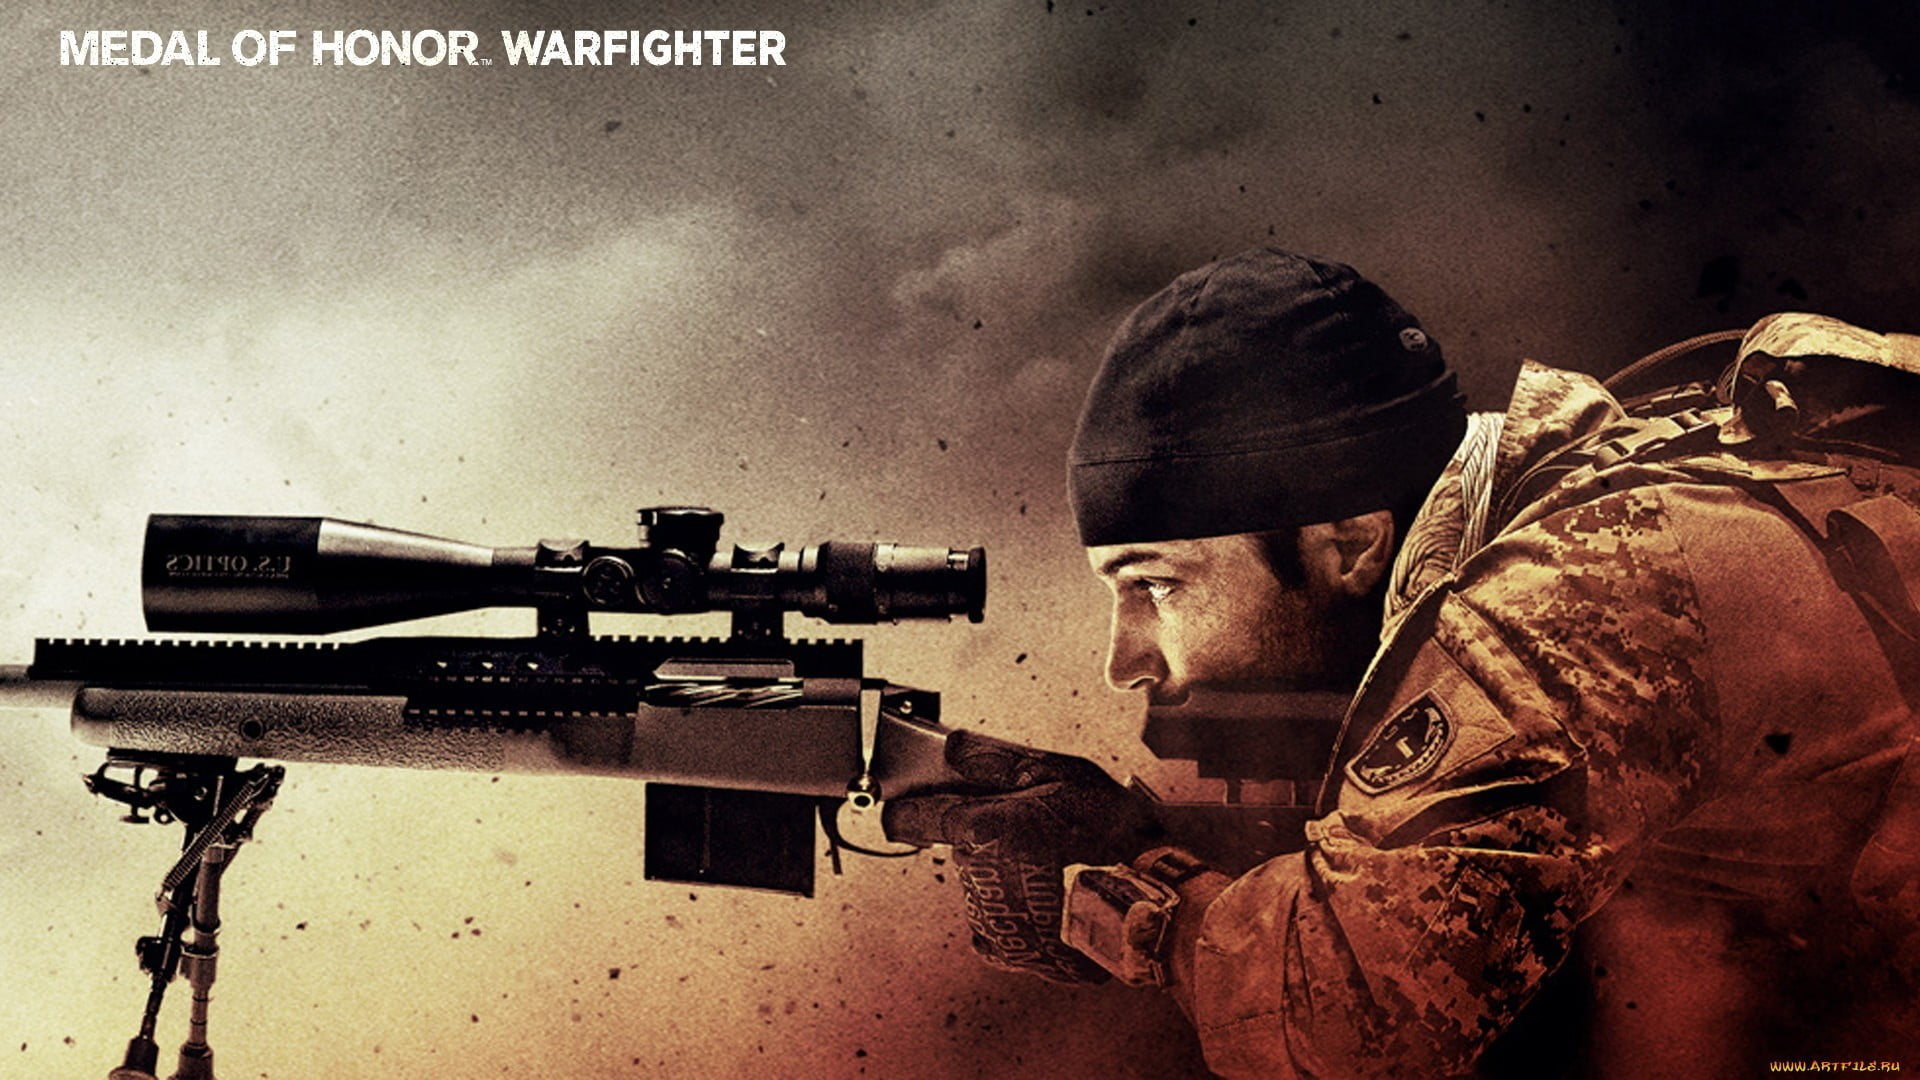 sniper, sight, rifle, MoH, warfighter